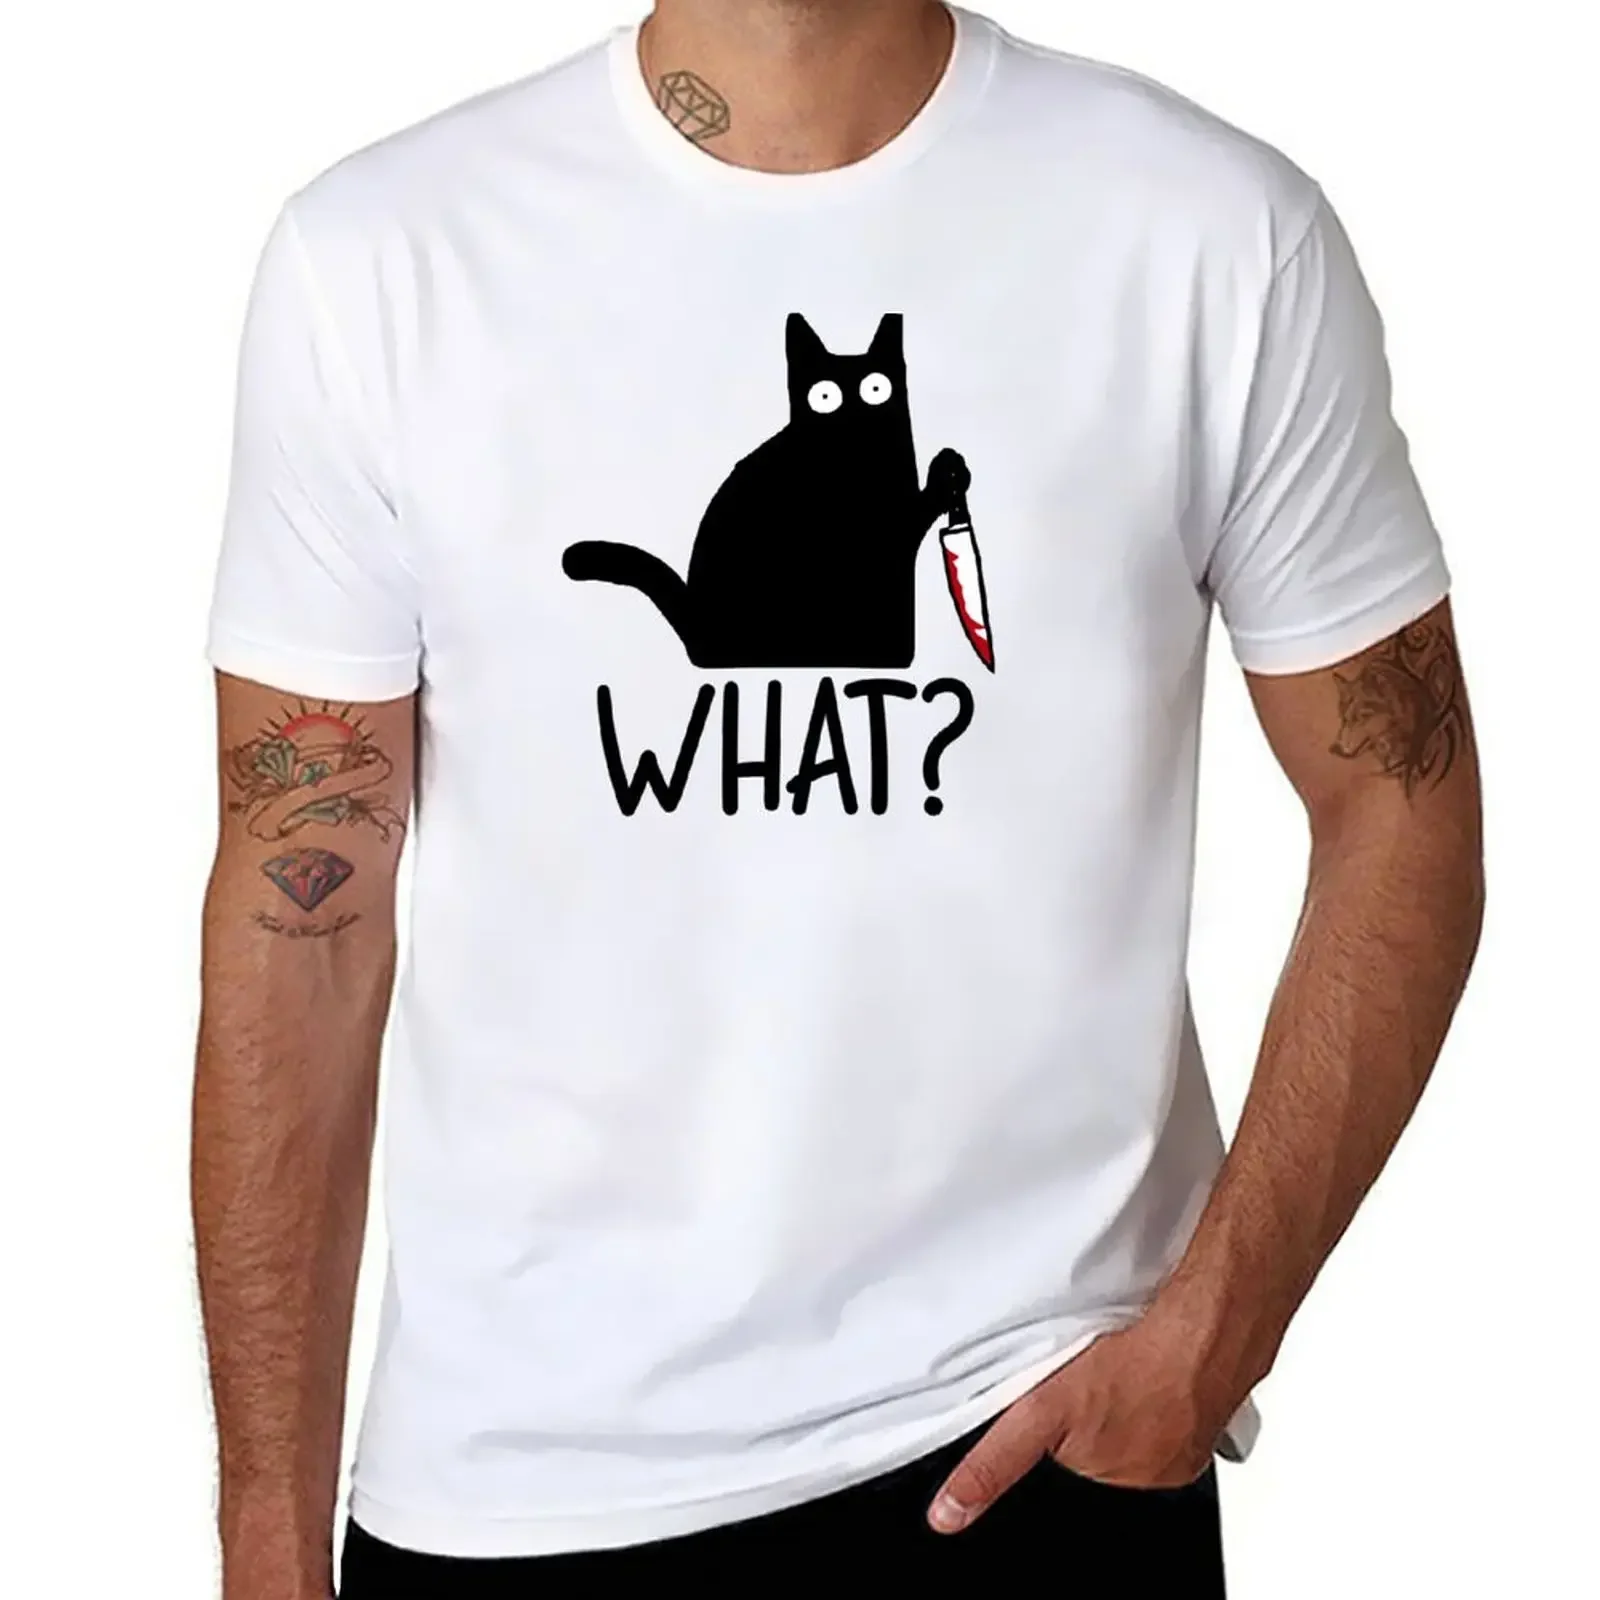 

Black Cat Holding Knife T-Shirt plain sublime oversized heavy weight t shirts for men